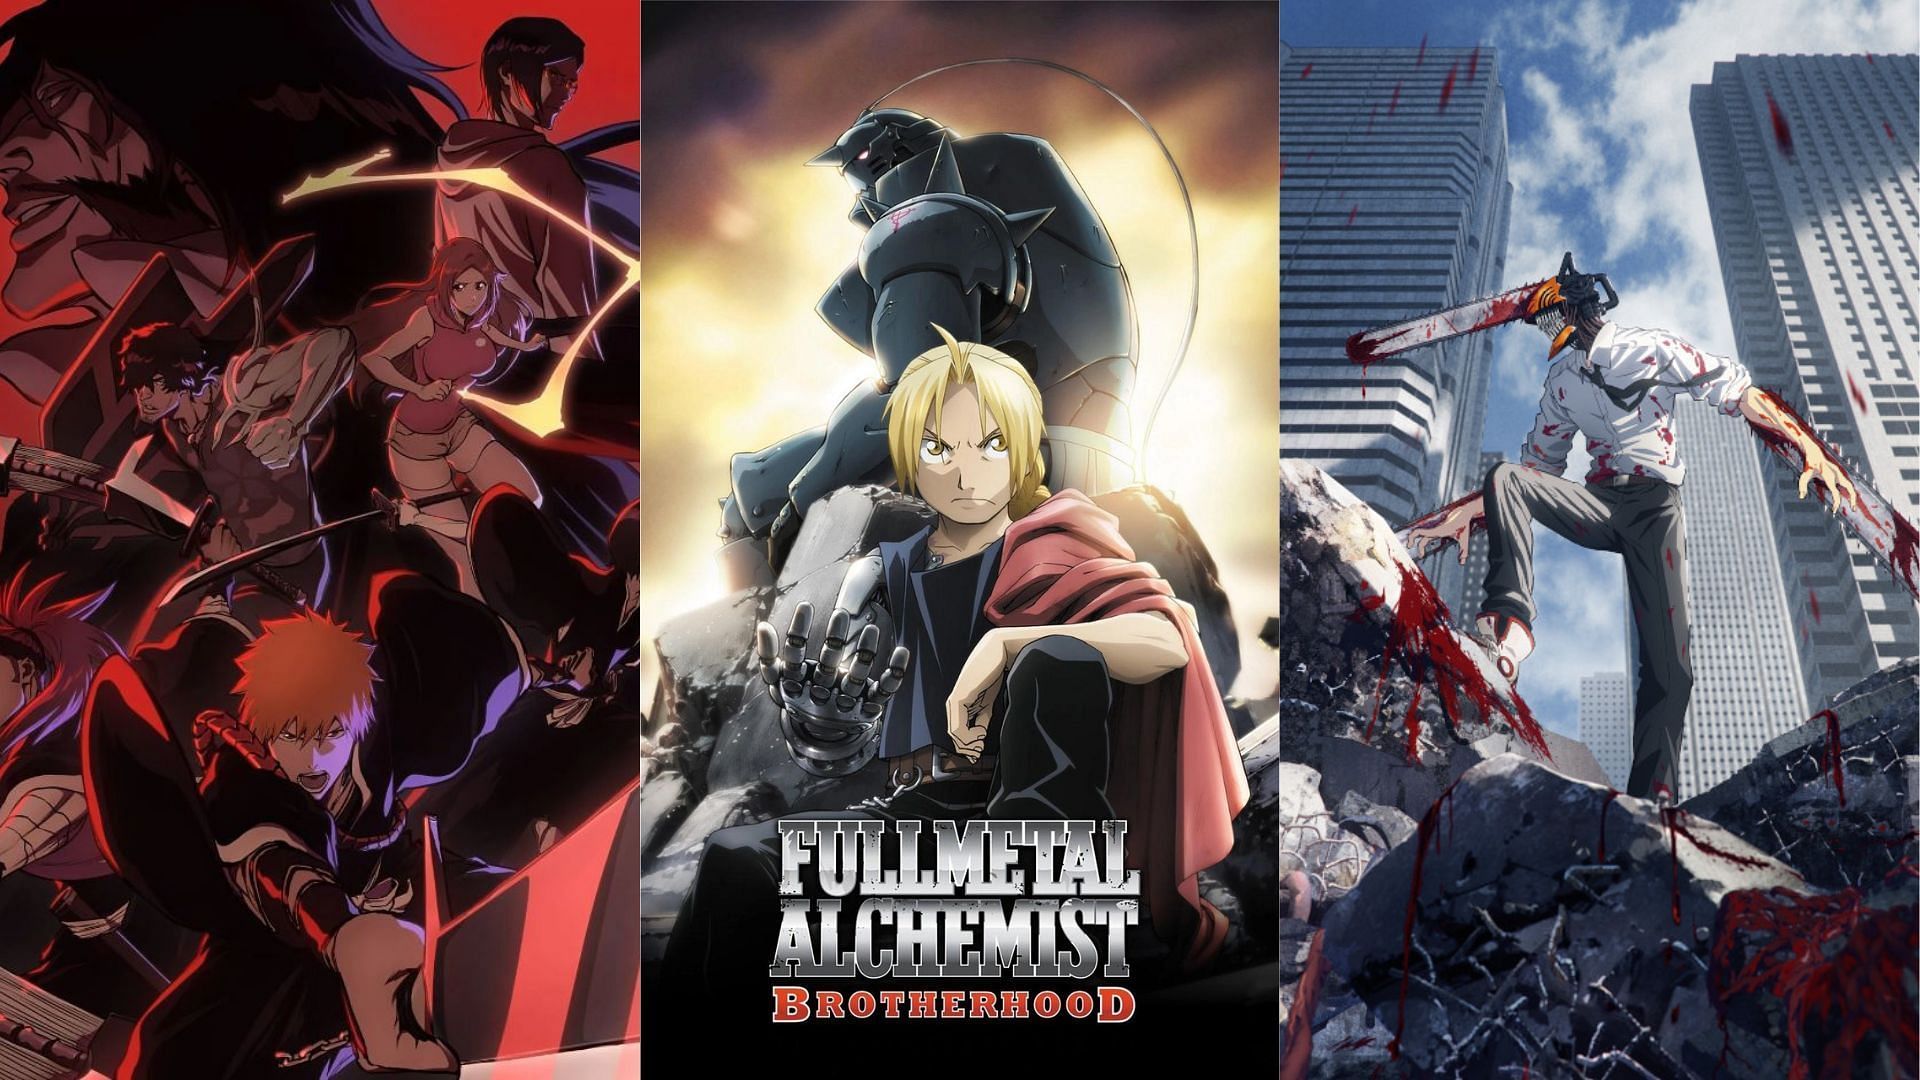 Fullmetal Alchemist Brotherhood Dethroned: New Anime At Top of My Anime List